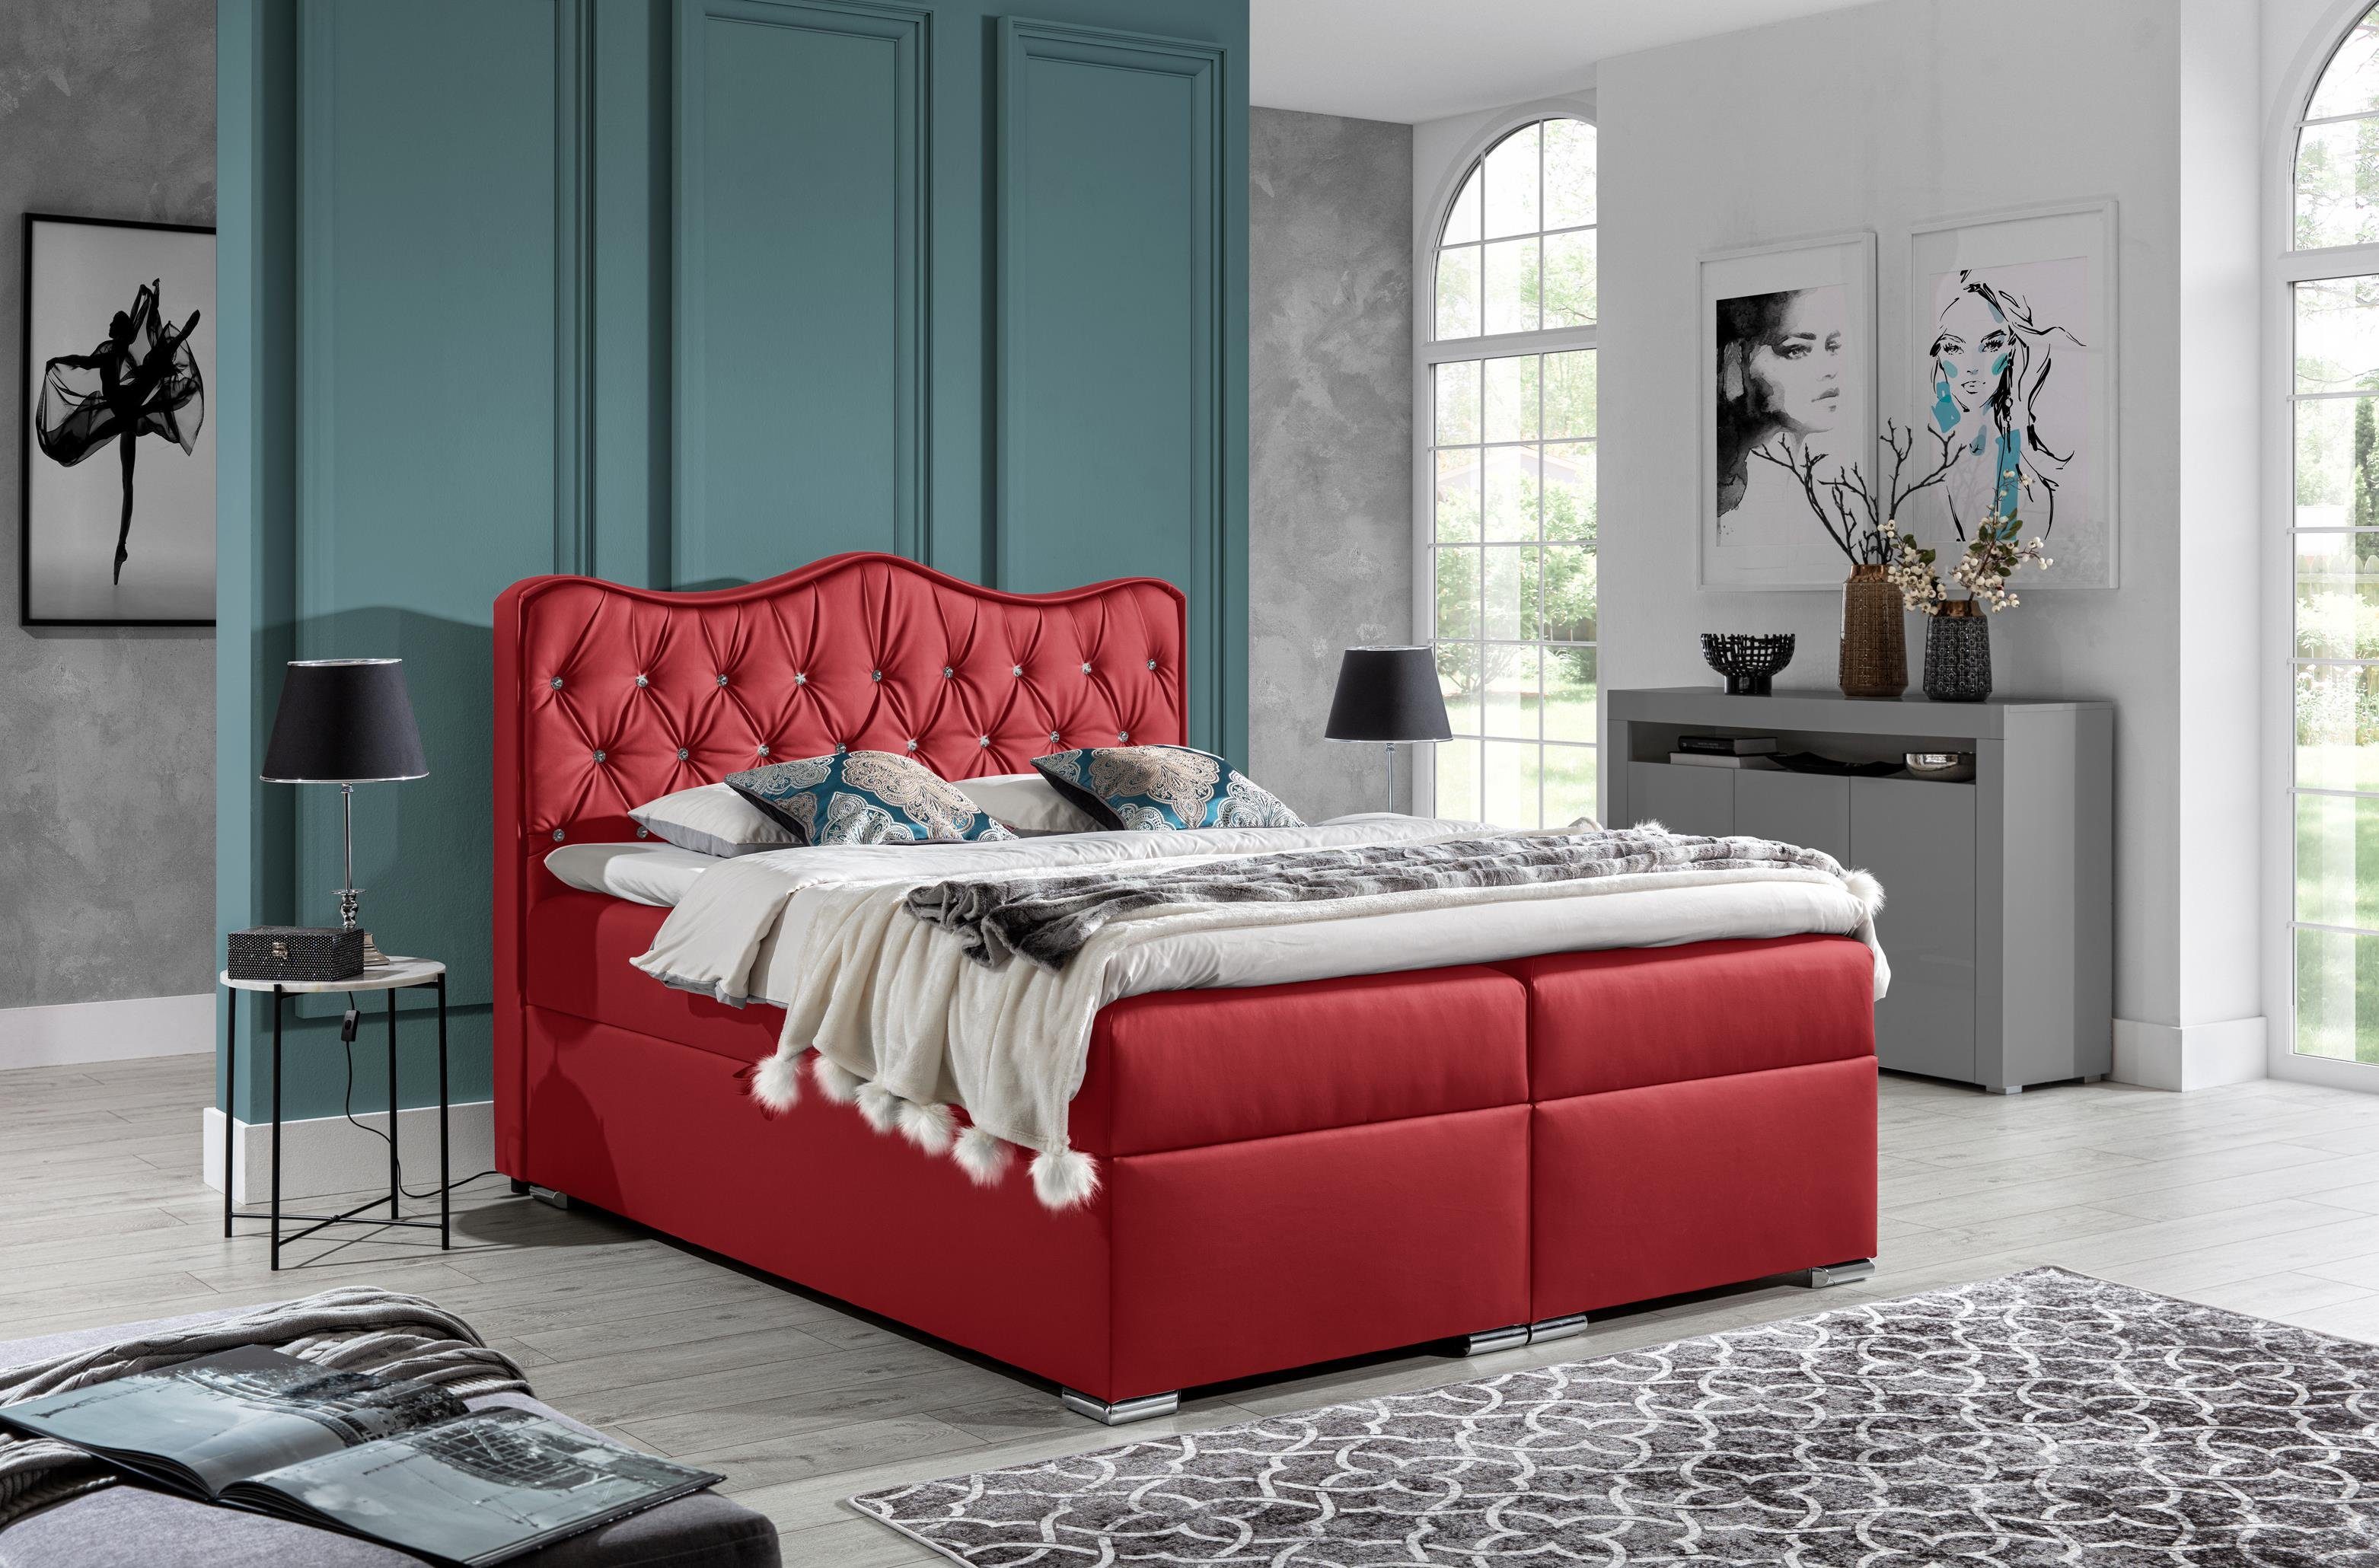 Furnix Boxspringbett TANSEL 120x200 Bett mit Topper und Bettkasten Ökoleder, hochwertiges veganes PU-Leder Rot